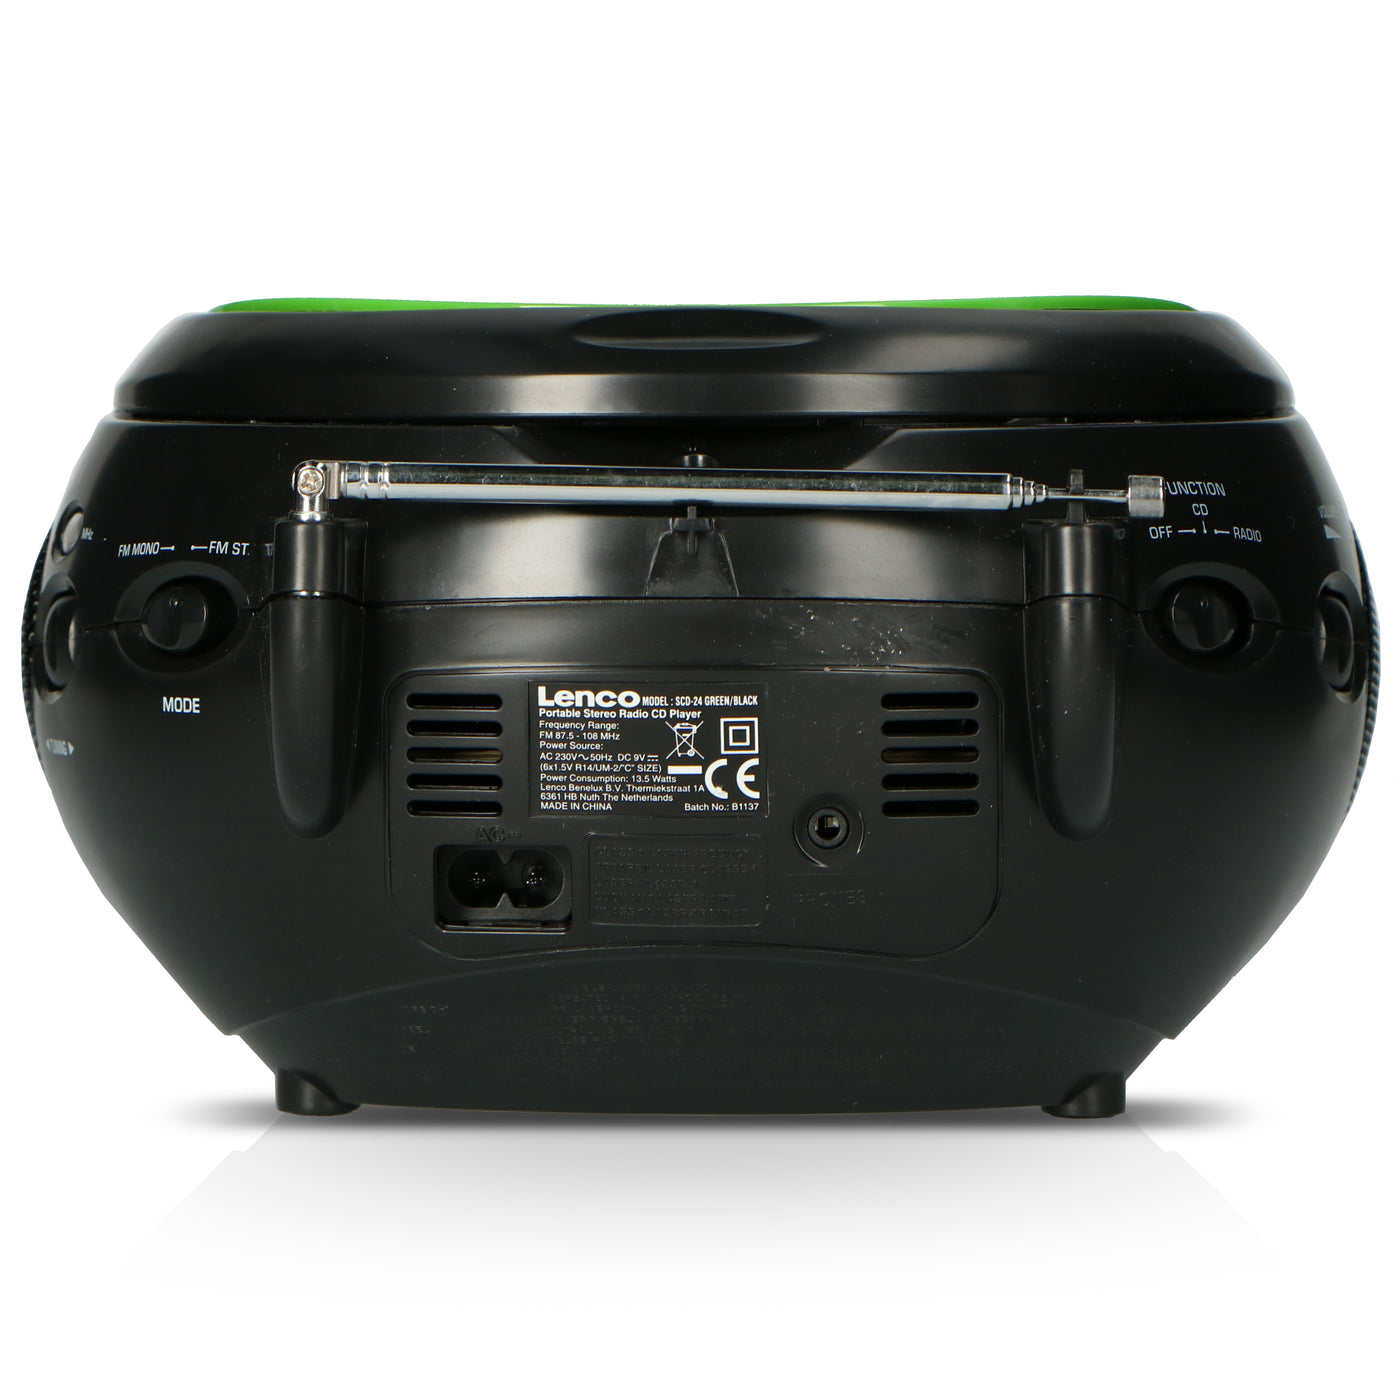 LENCO SCD-24 Green/Black - Portable stereo FM radio with CD player